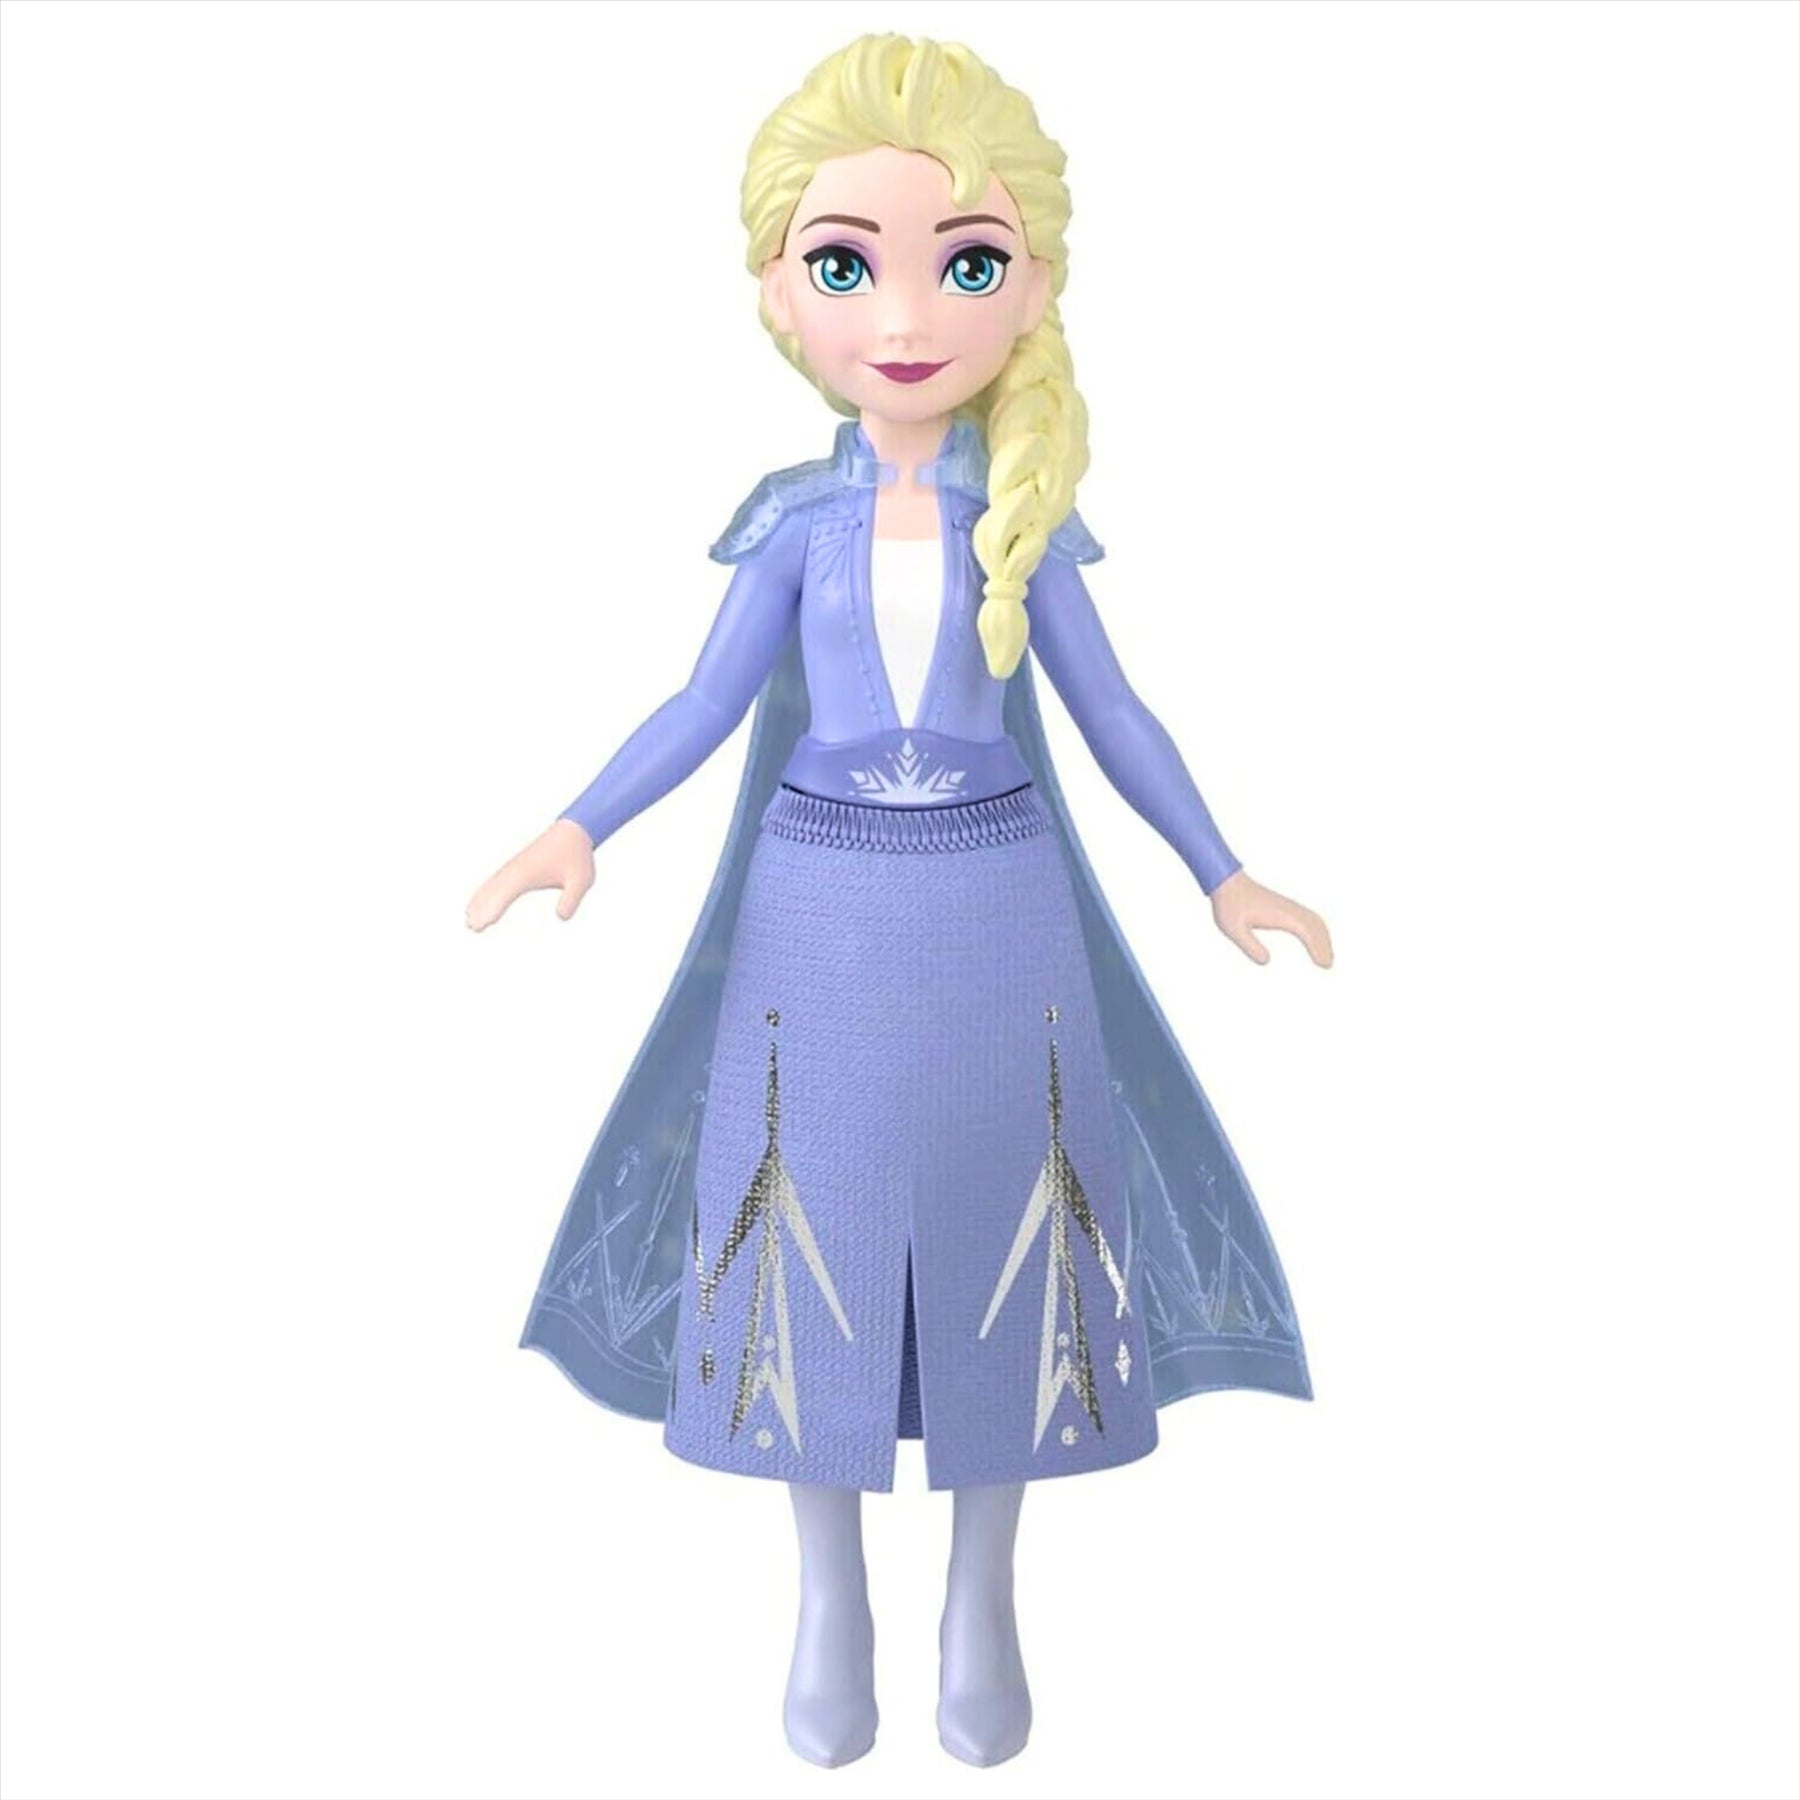 Disney Frozen Elsa 10cm Articulated Action Figure Play Toy